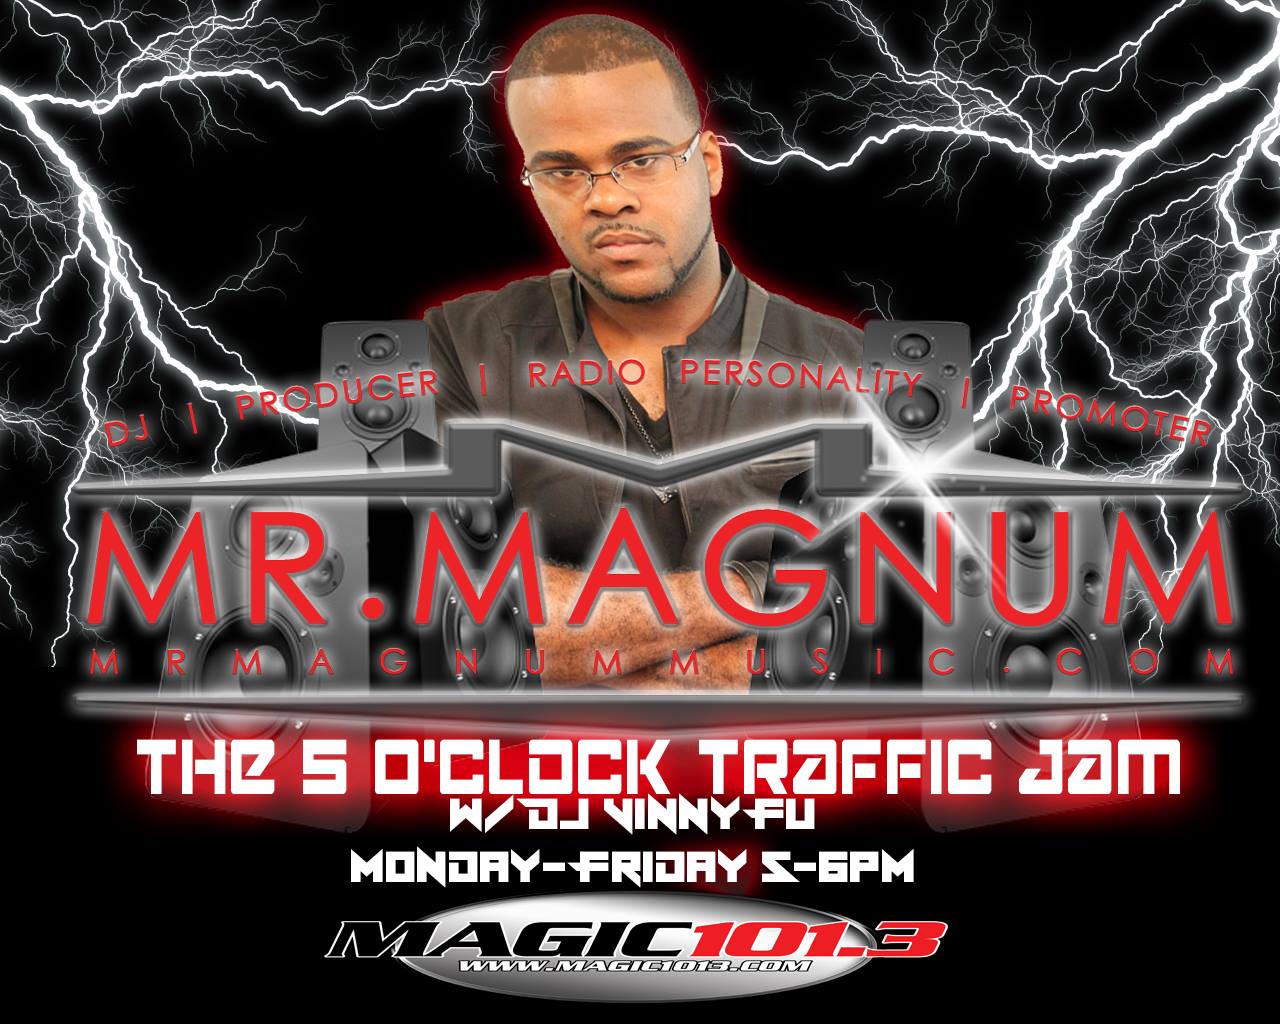 The 5 O’Clock Traffic Jam 2-22-2017 on Magic 101.3